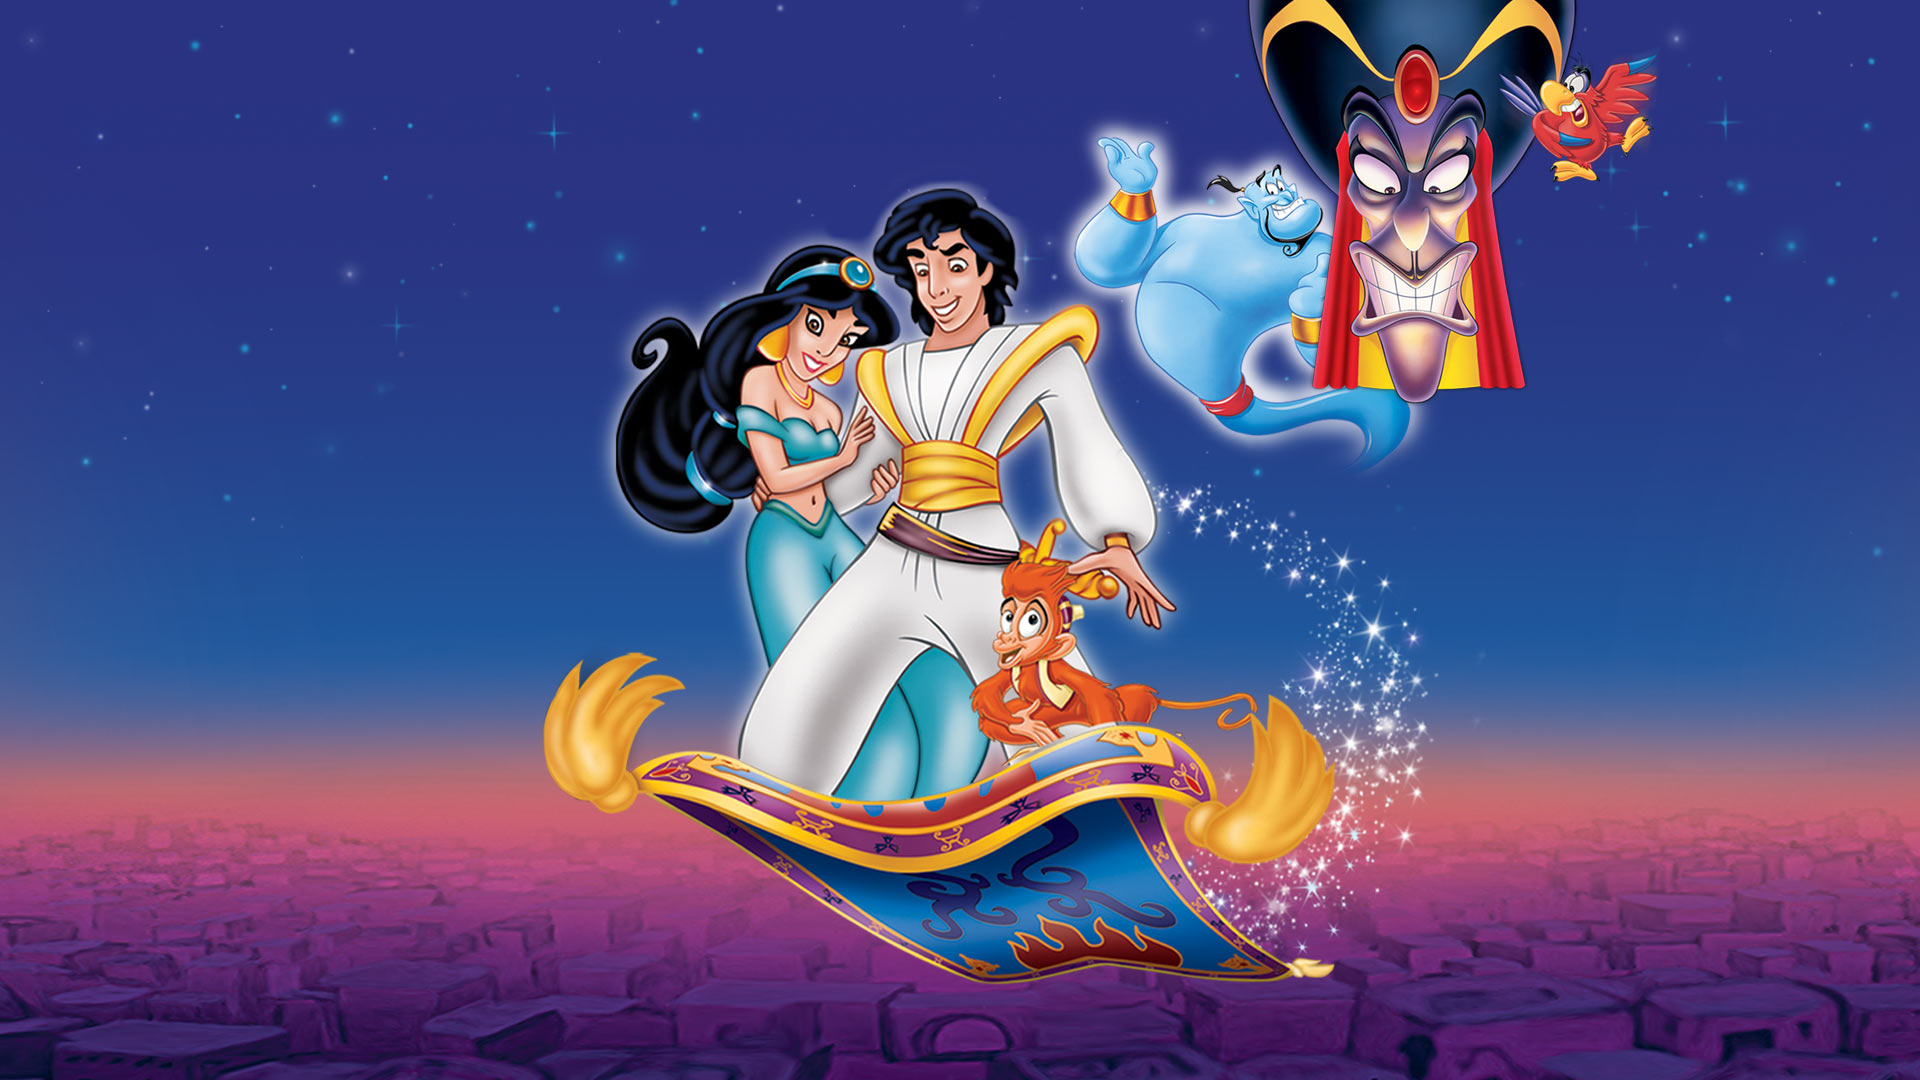 Aladdin: The Return of Jafar - Disney+